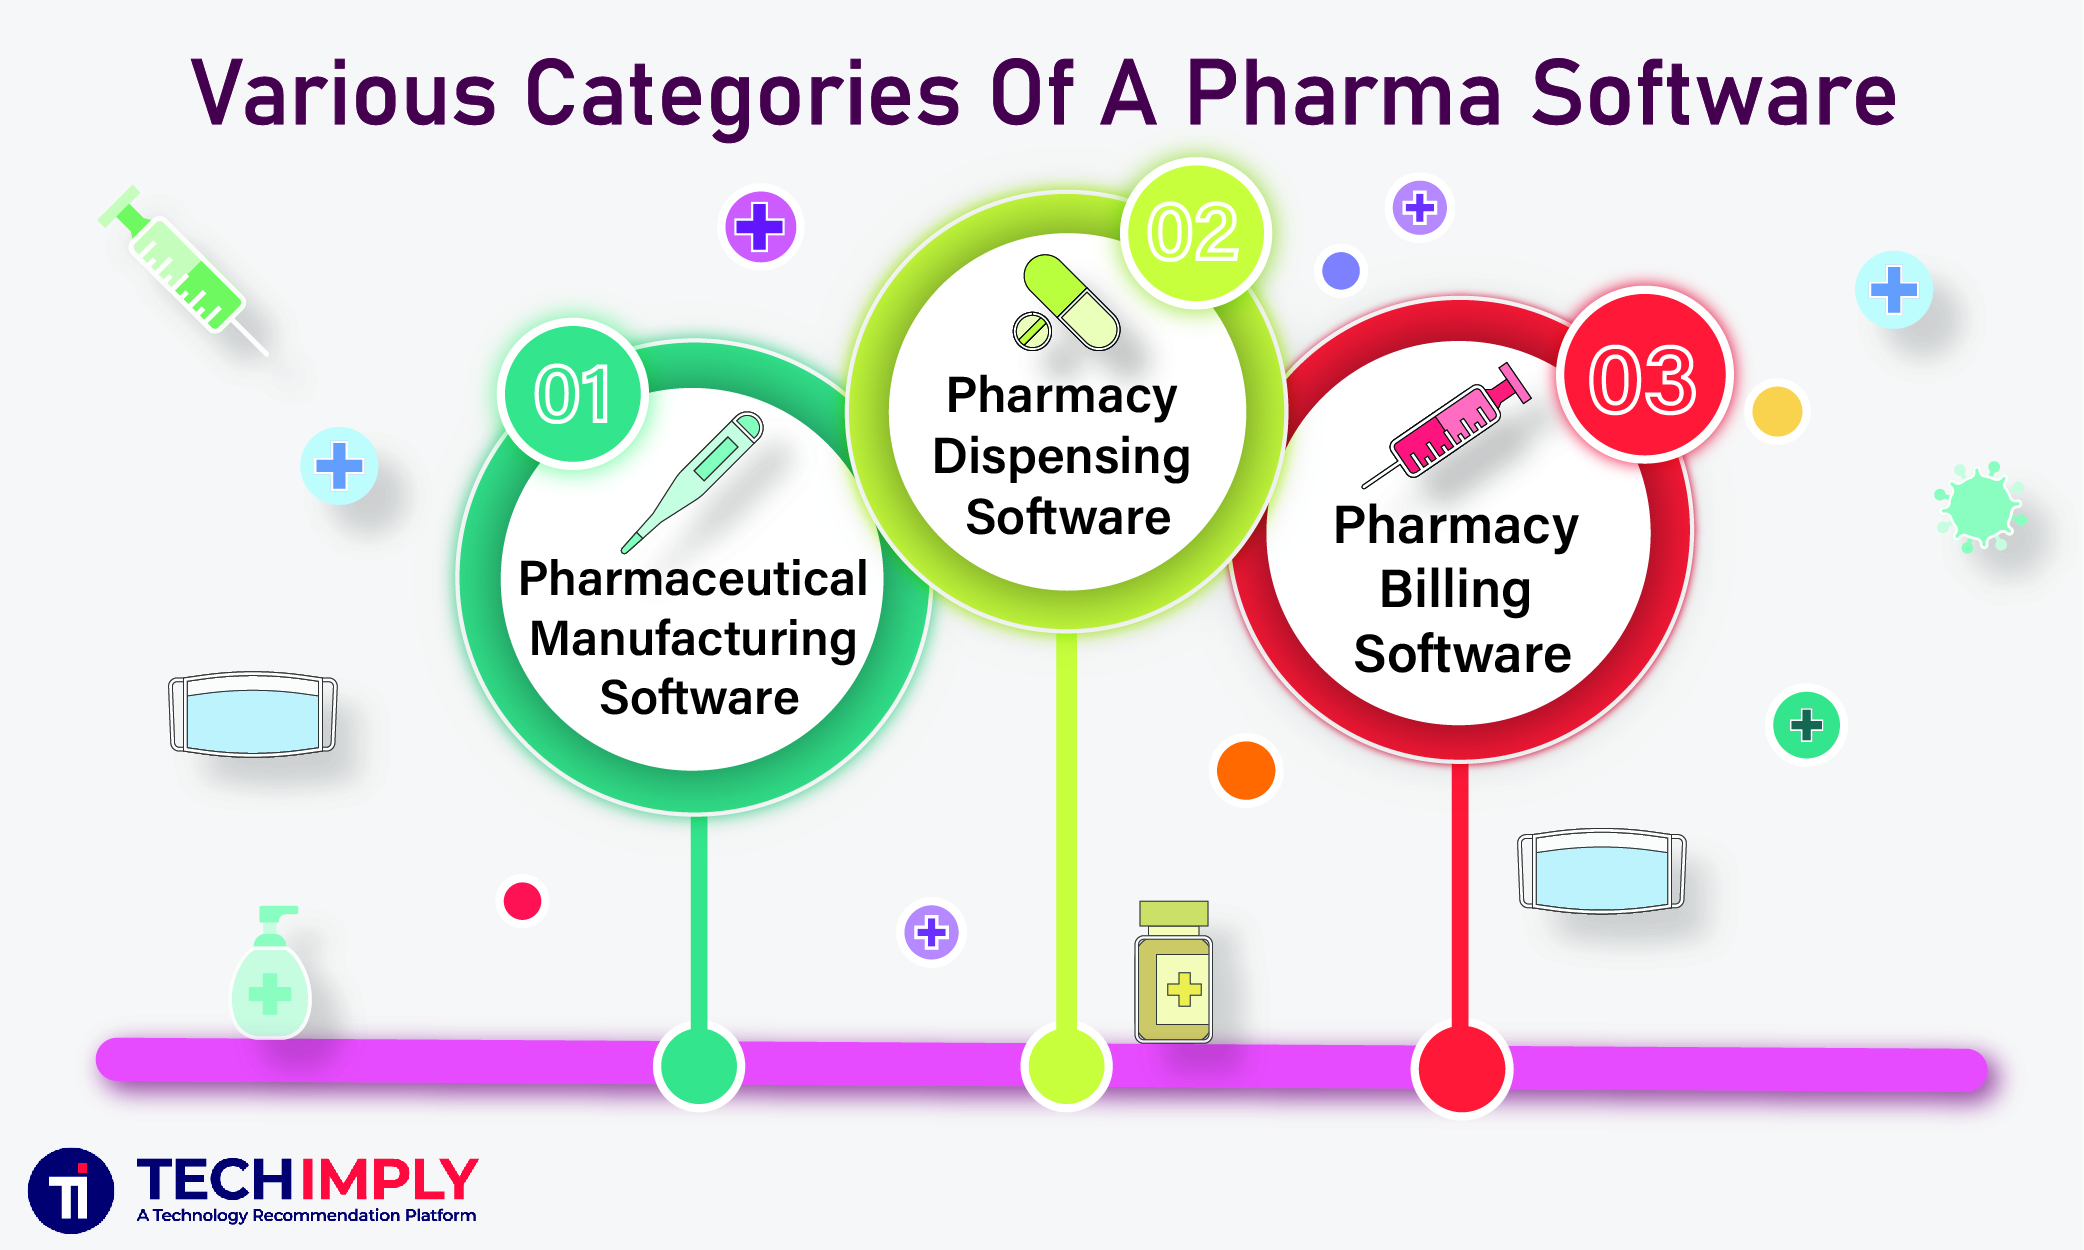 Pharma Software